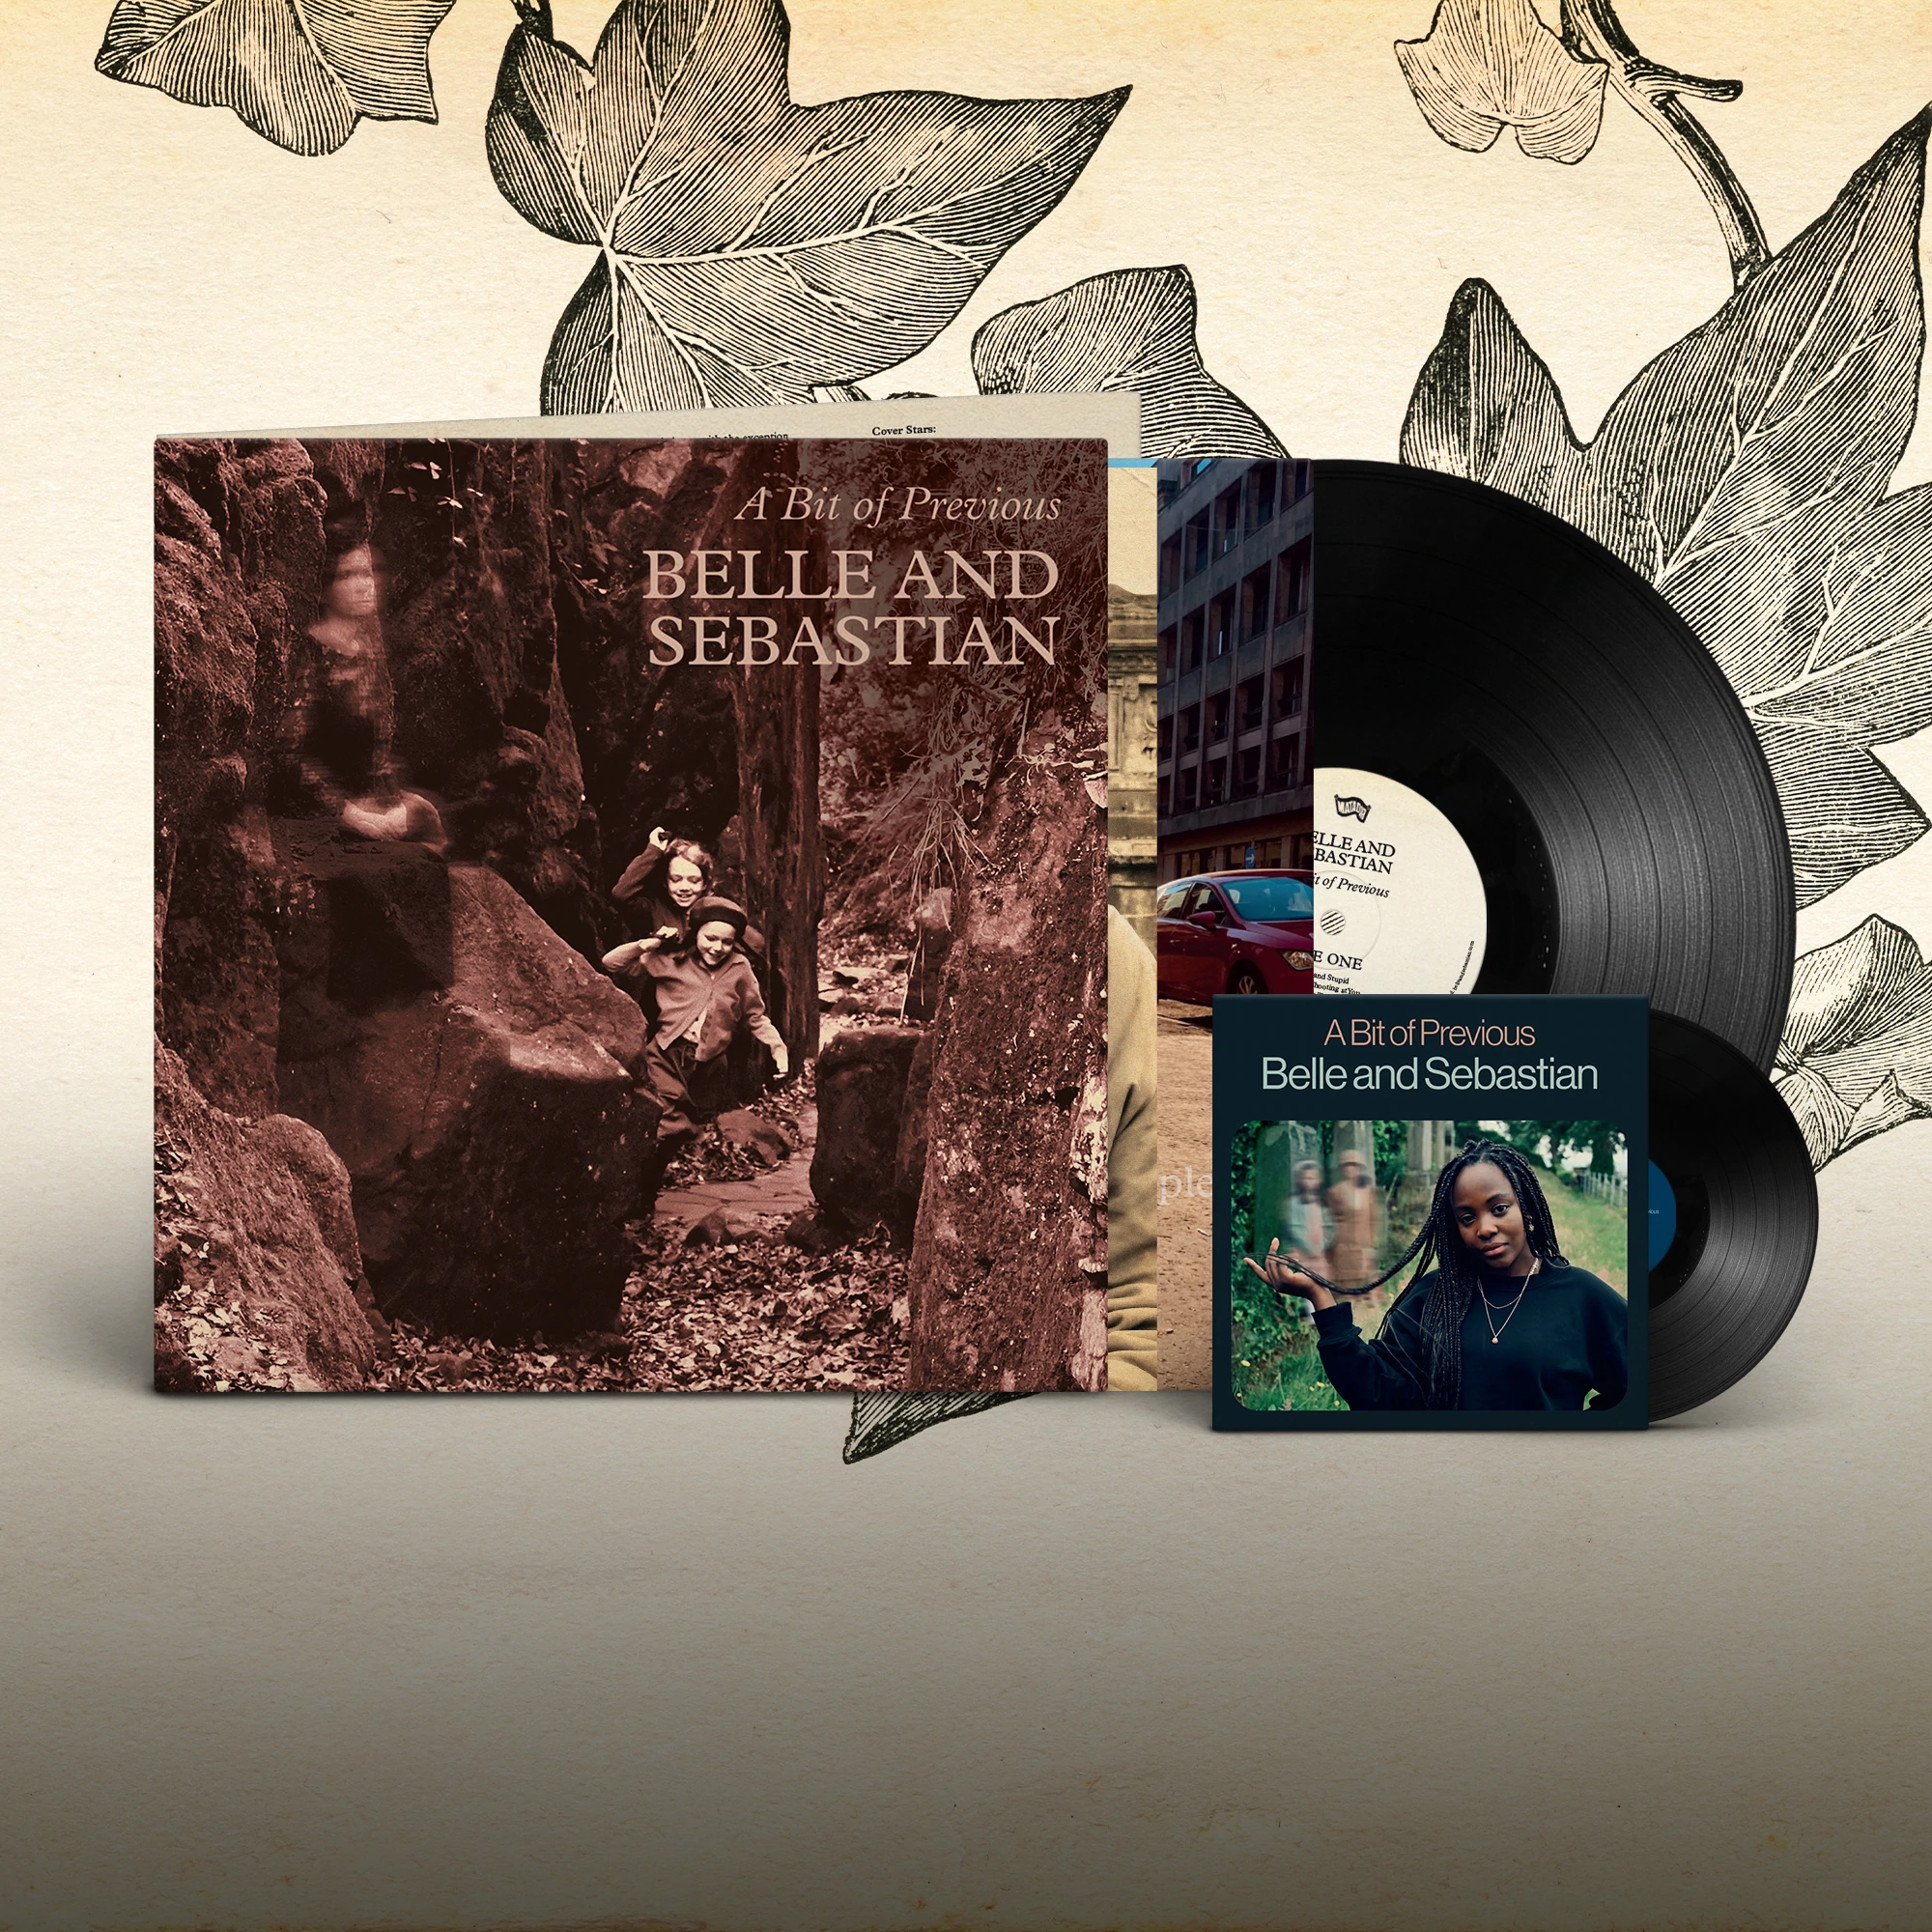 Belle & Sebastian "A Bit of Previous" LP+ 7"